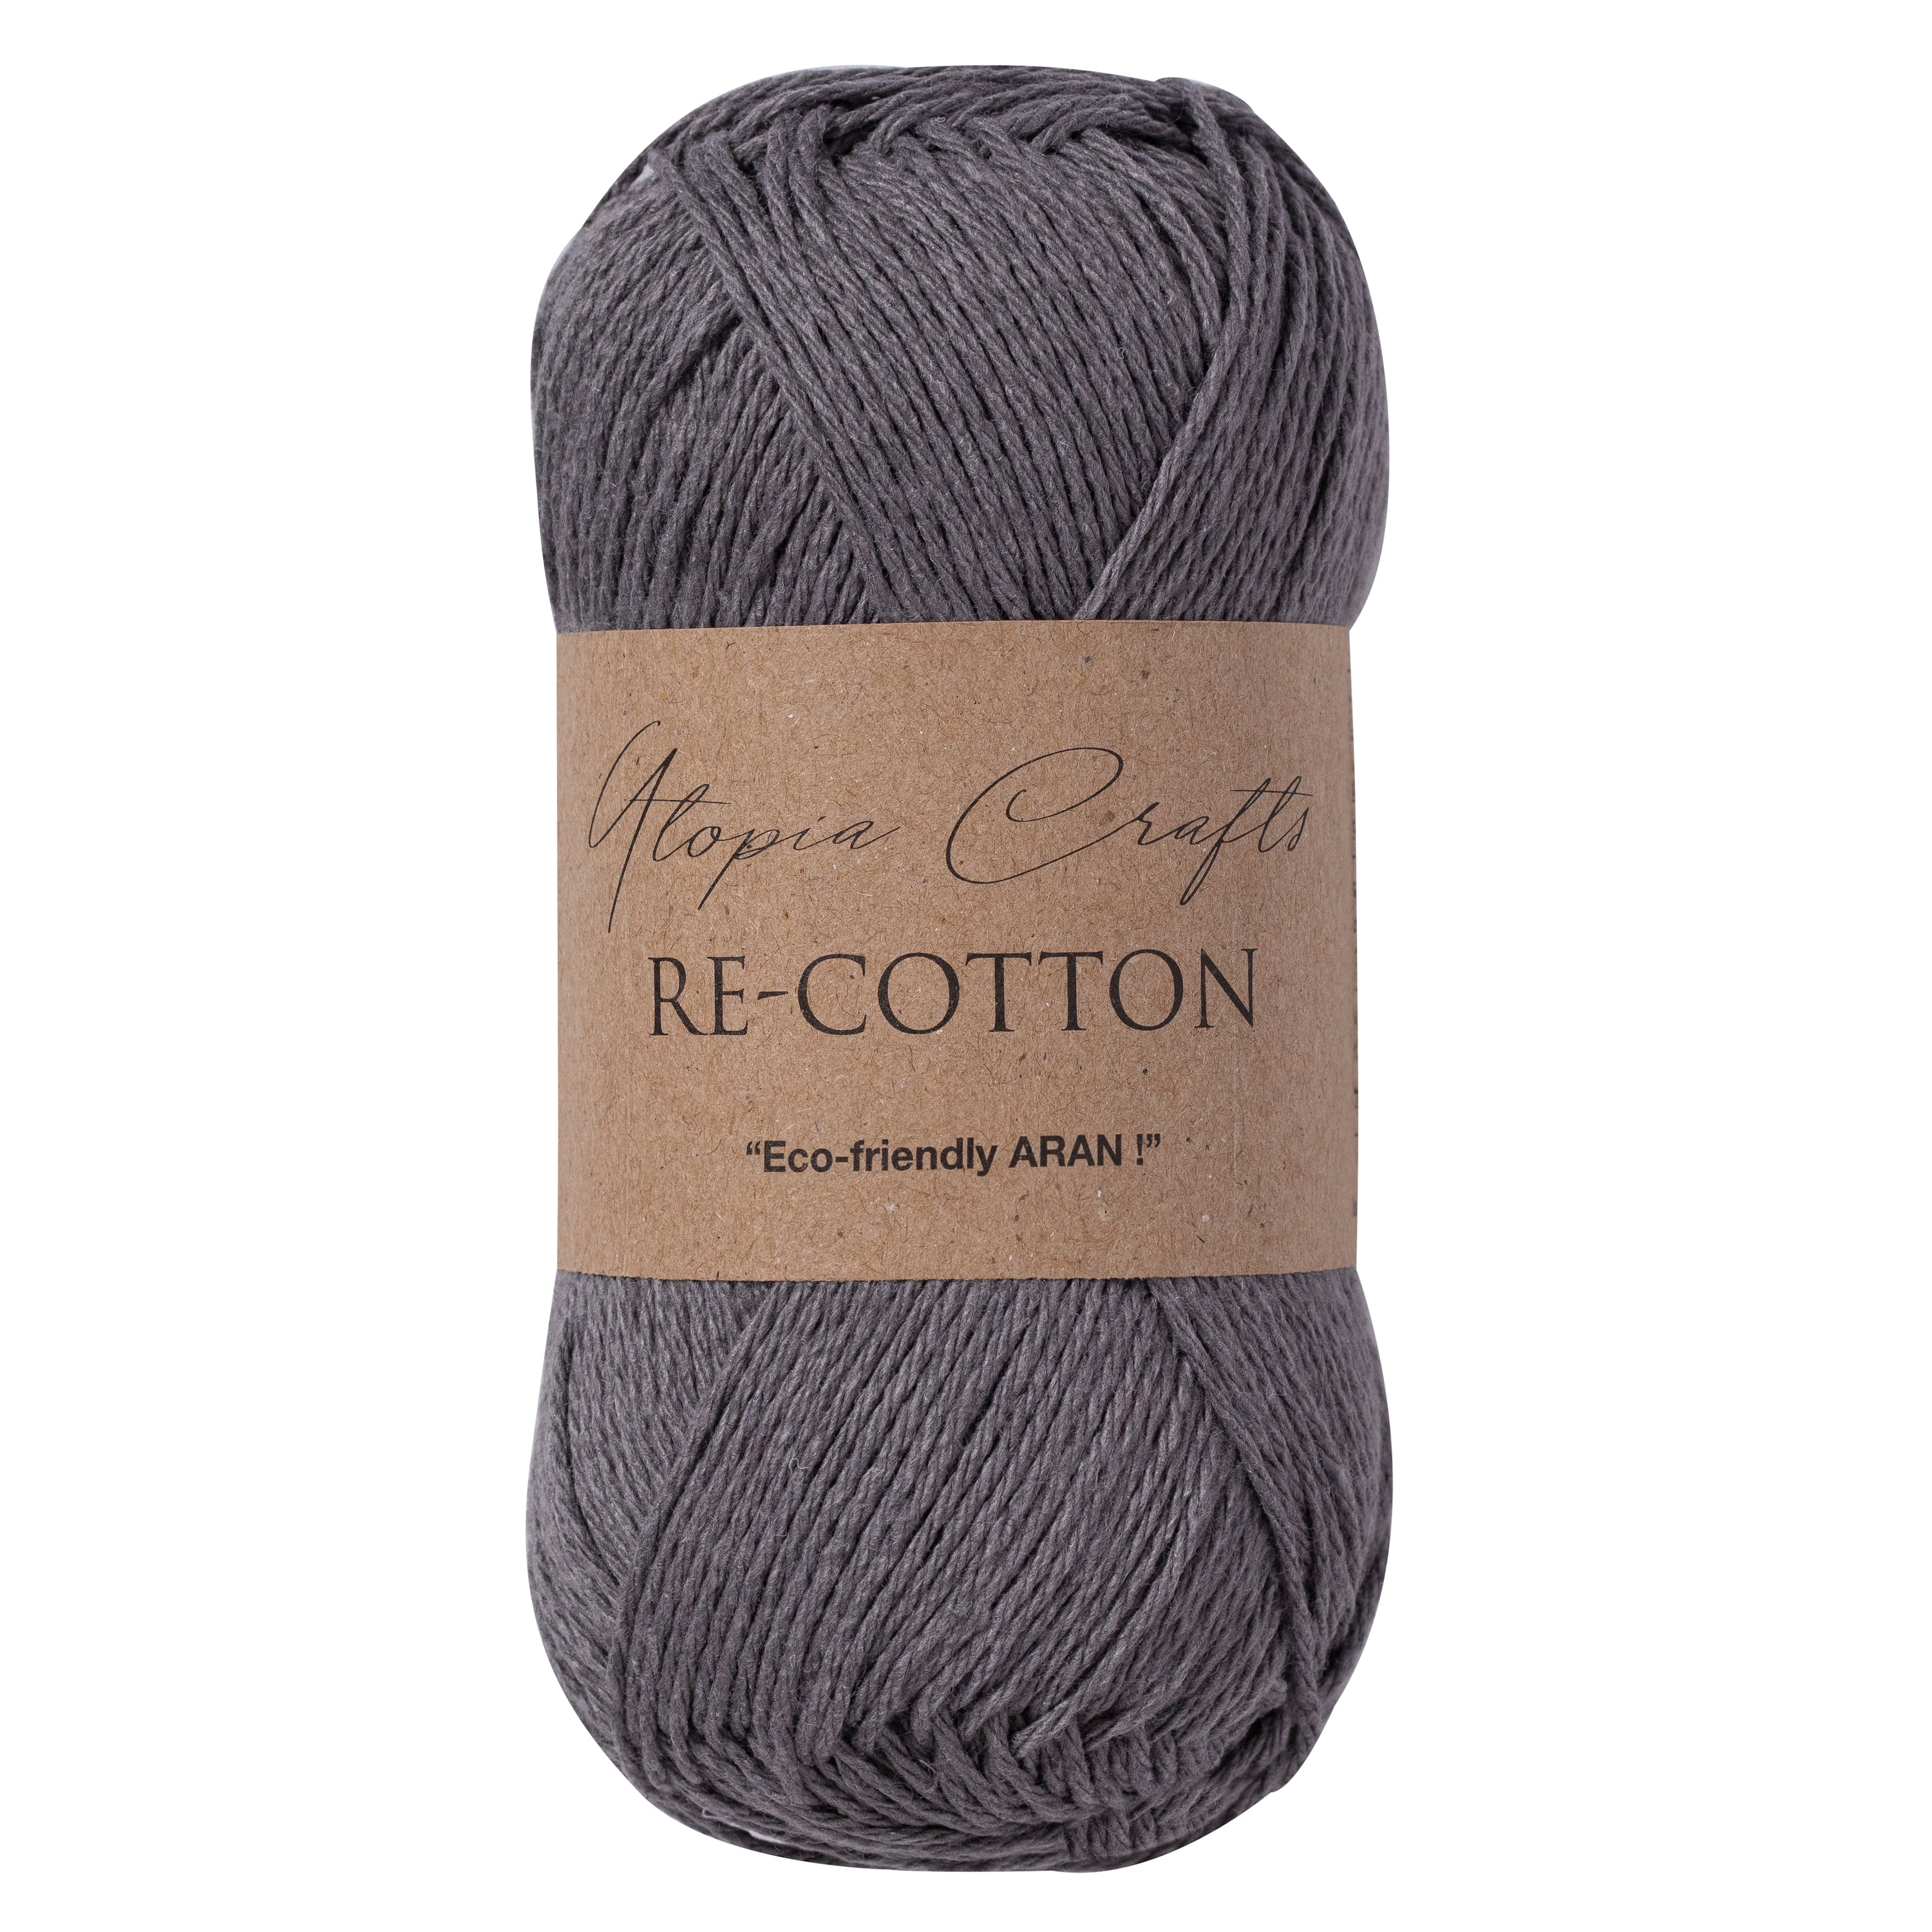 Cotton Knitting Thread - Waldorf Art & Craft Supplies - Ava's